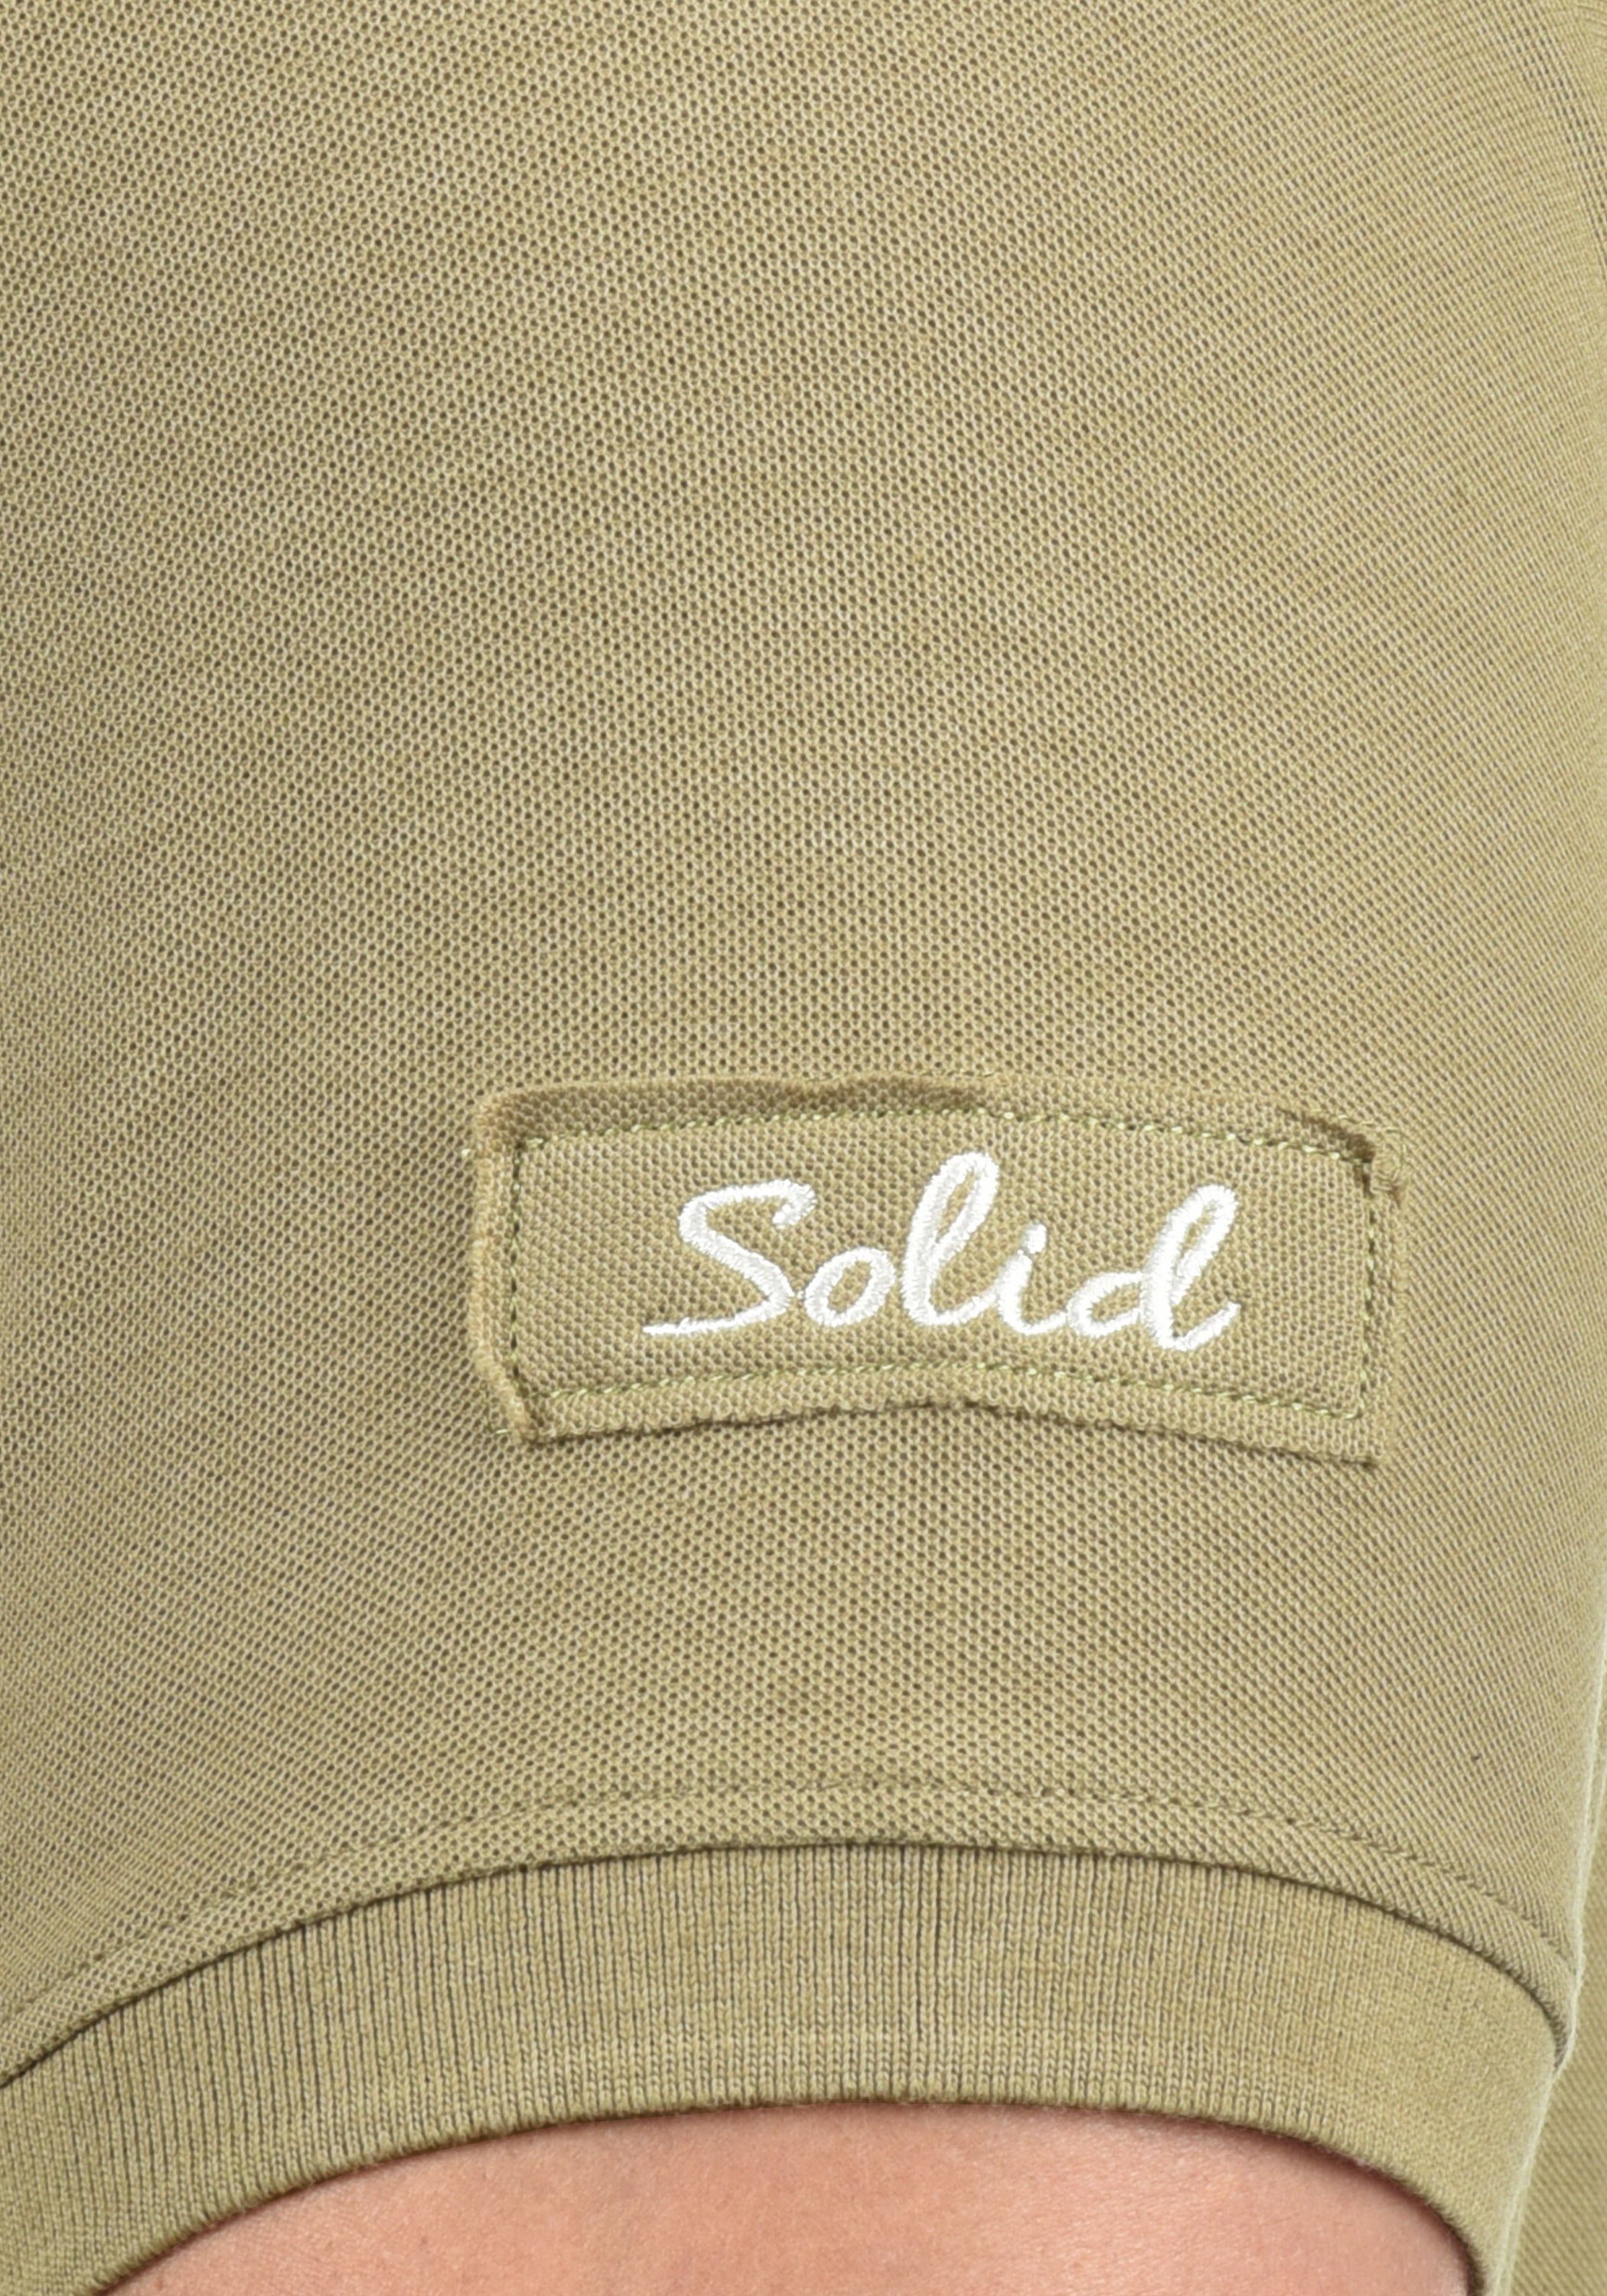 Herren Poloshirts  Solid Poloshirt SDTripPolo Polo mit verlängerter Rückenpartie